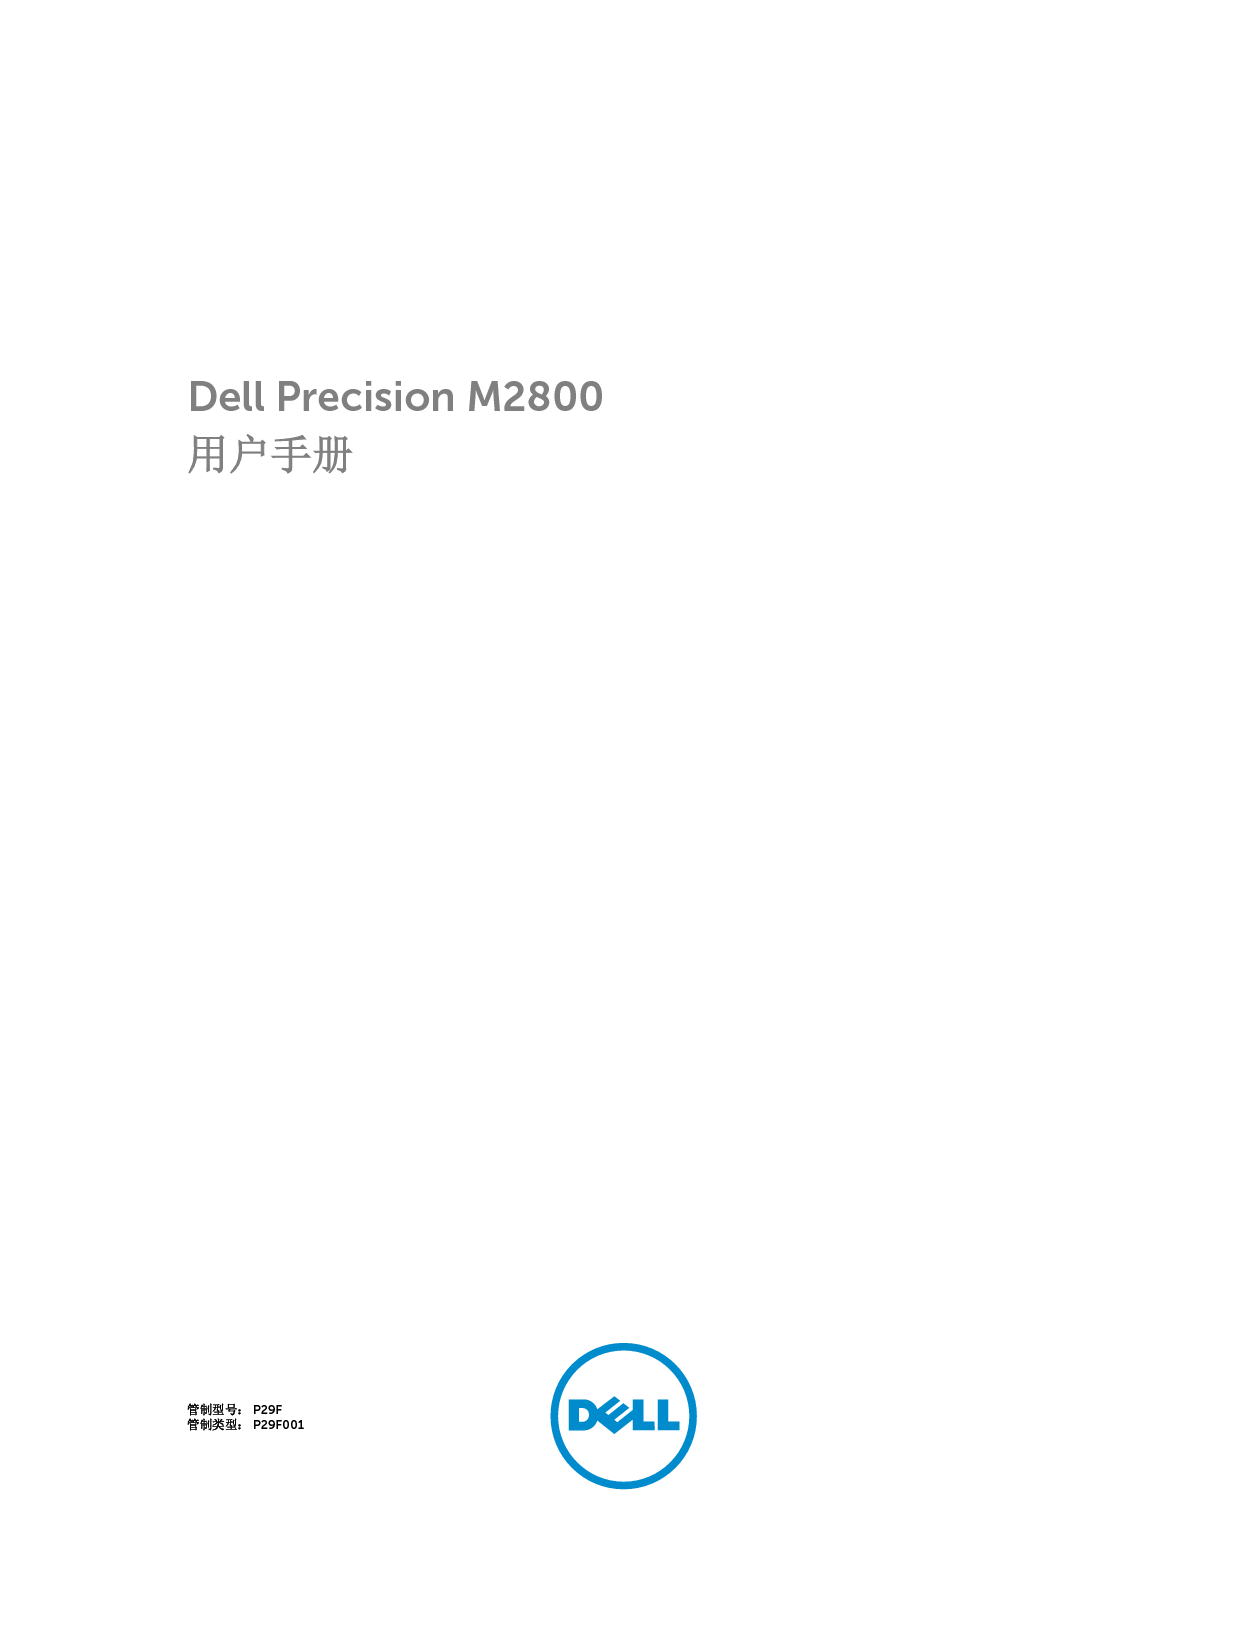 戴尔 Dell Precision M2800 用户手册 封面